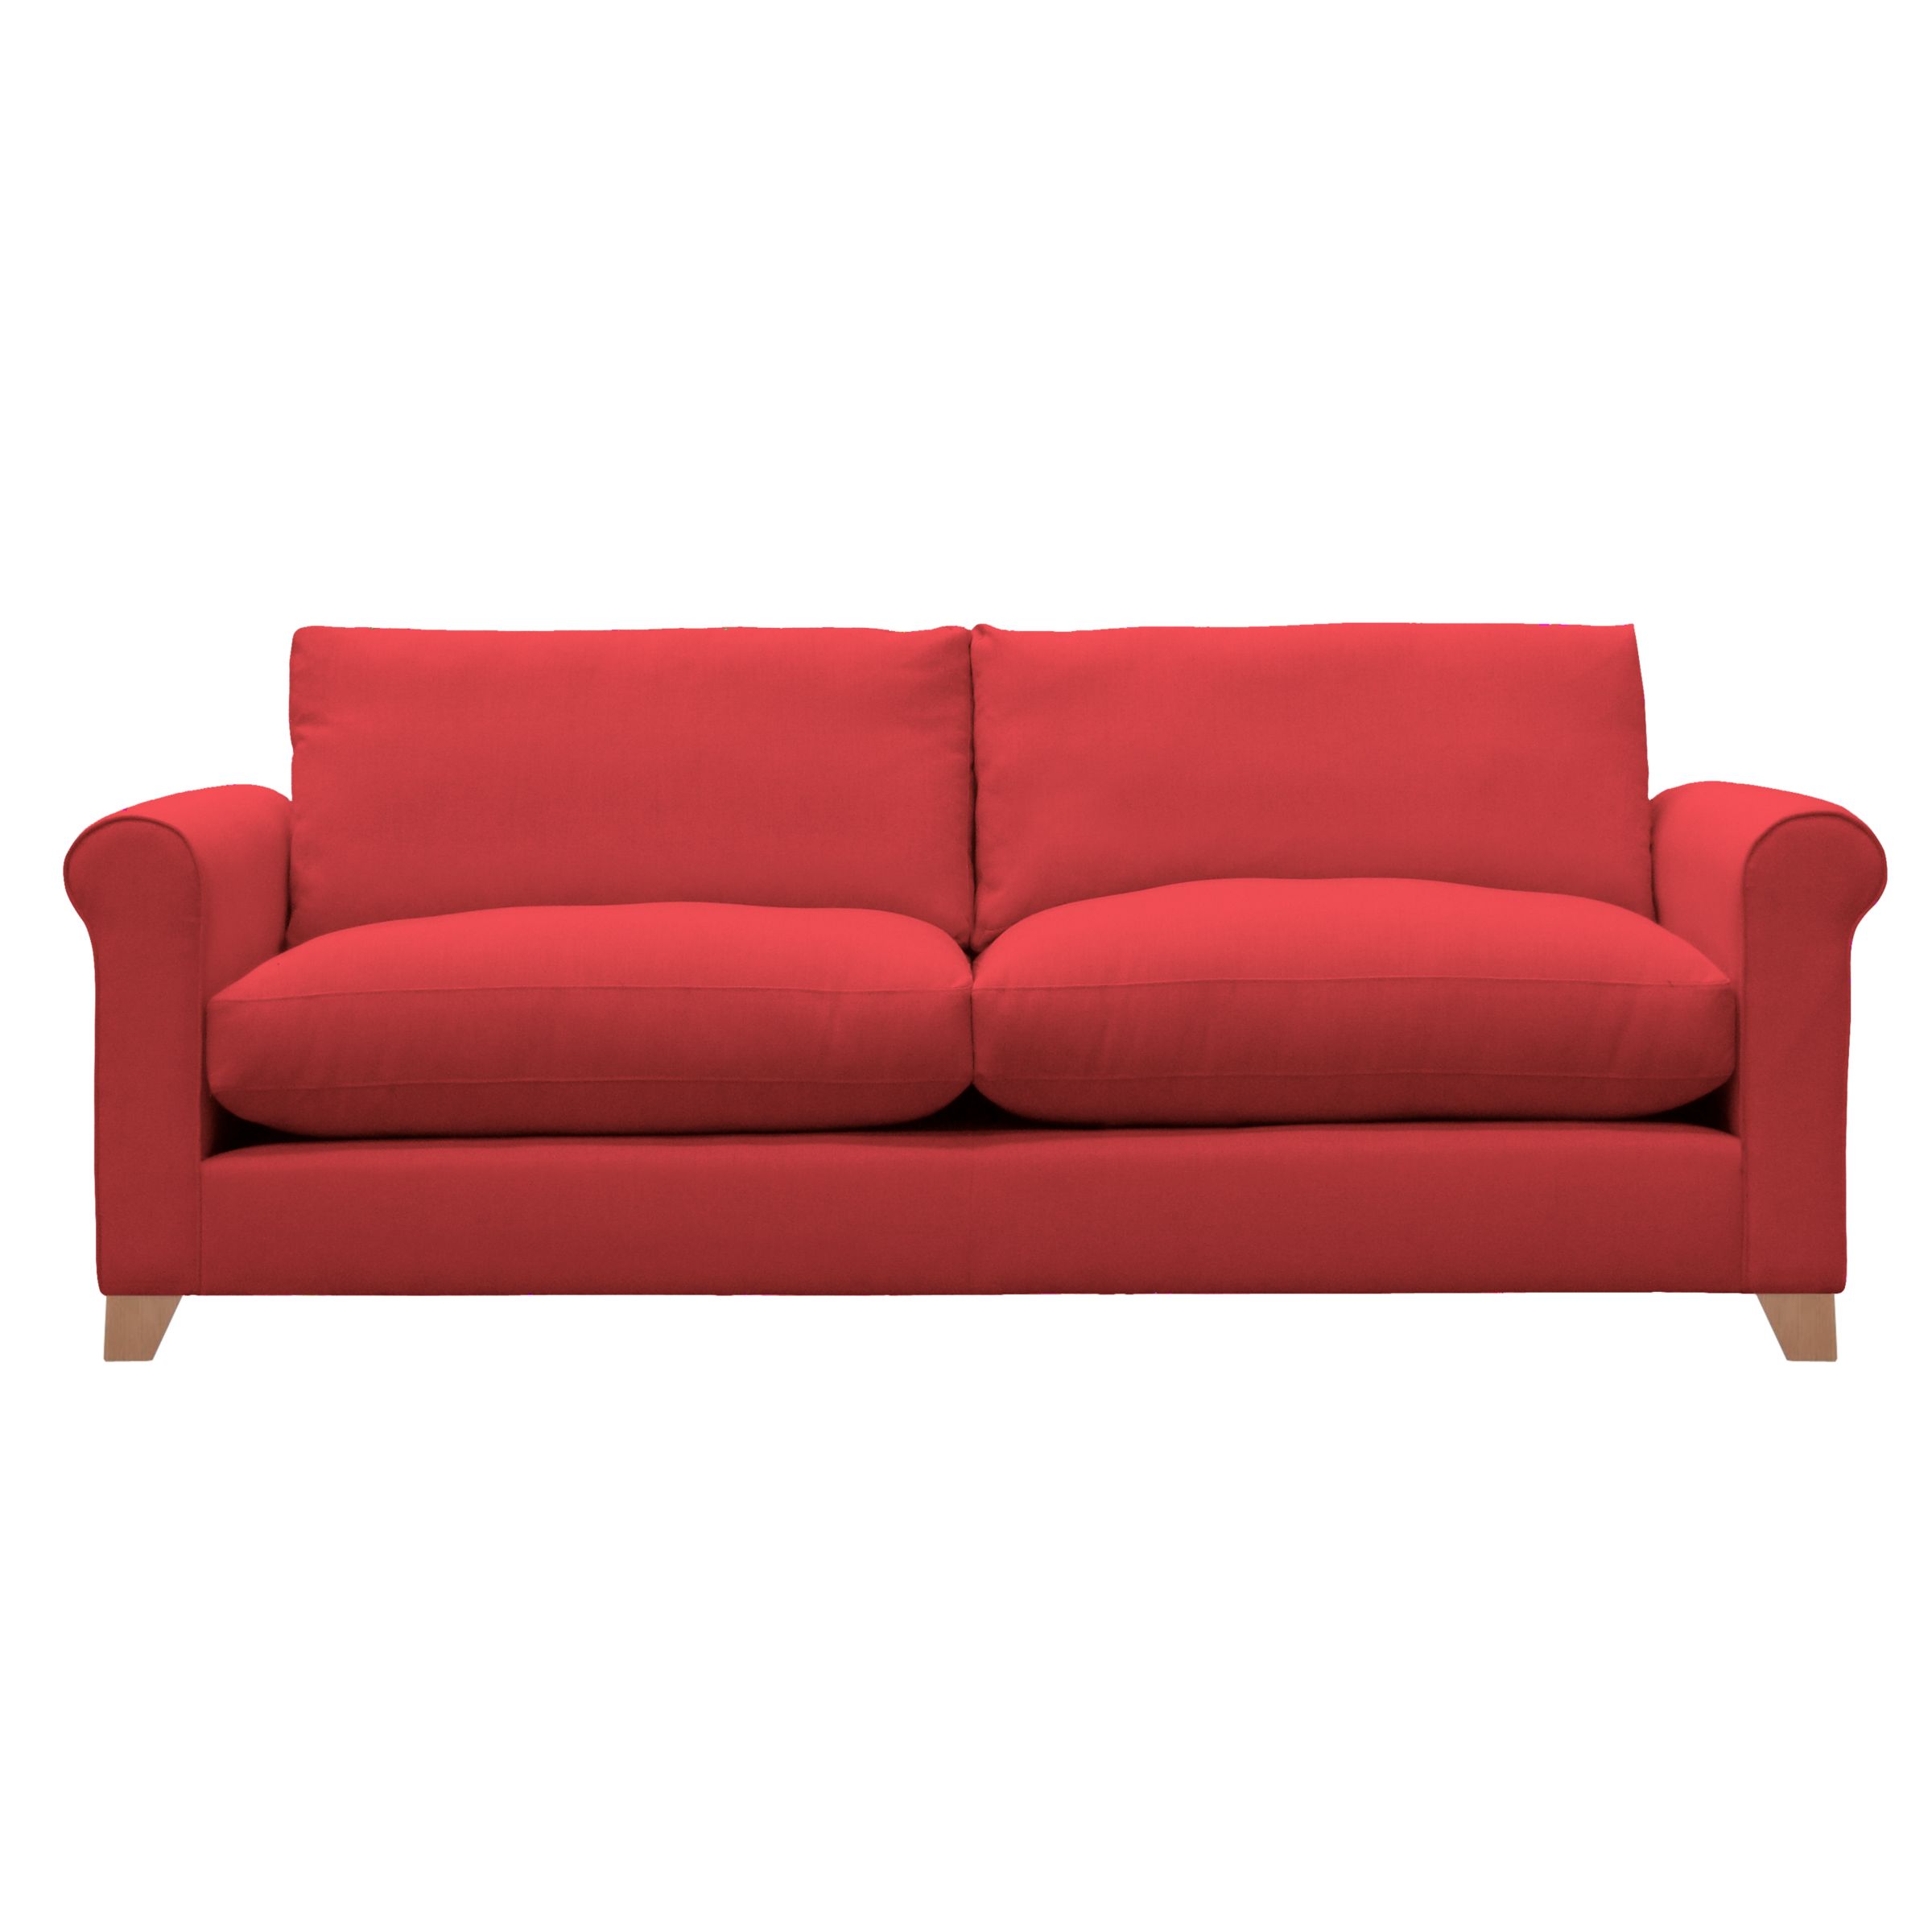 John Lewis Options Scroll Arm Grand Sofa, Linley Red, width 217cm